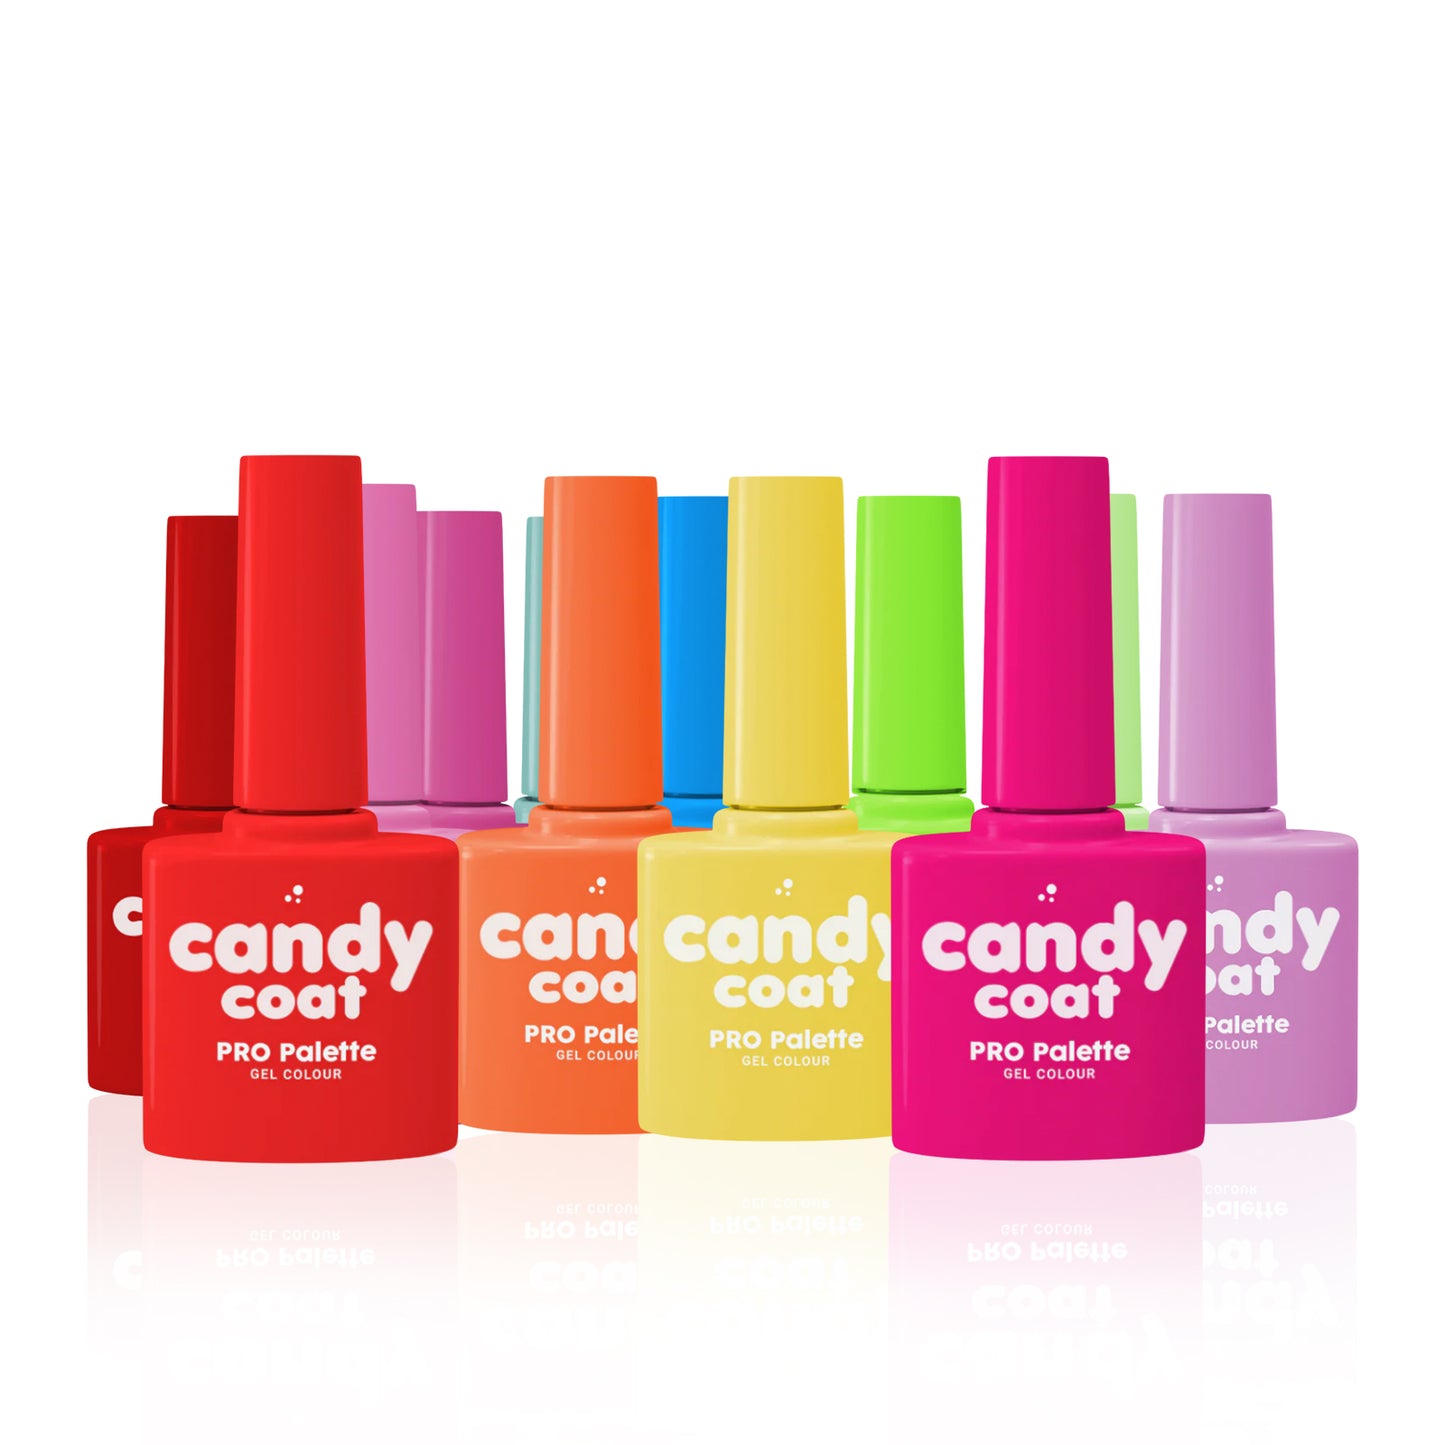 Candy Coat - PRO Palette Rainbow - Candy Coat